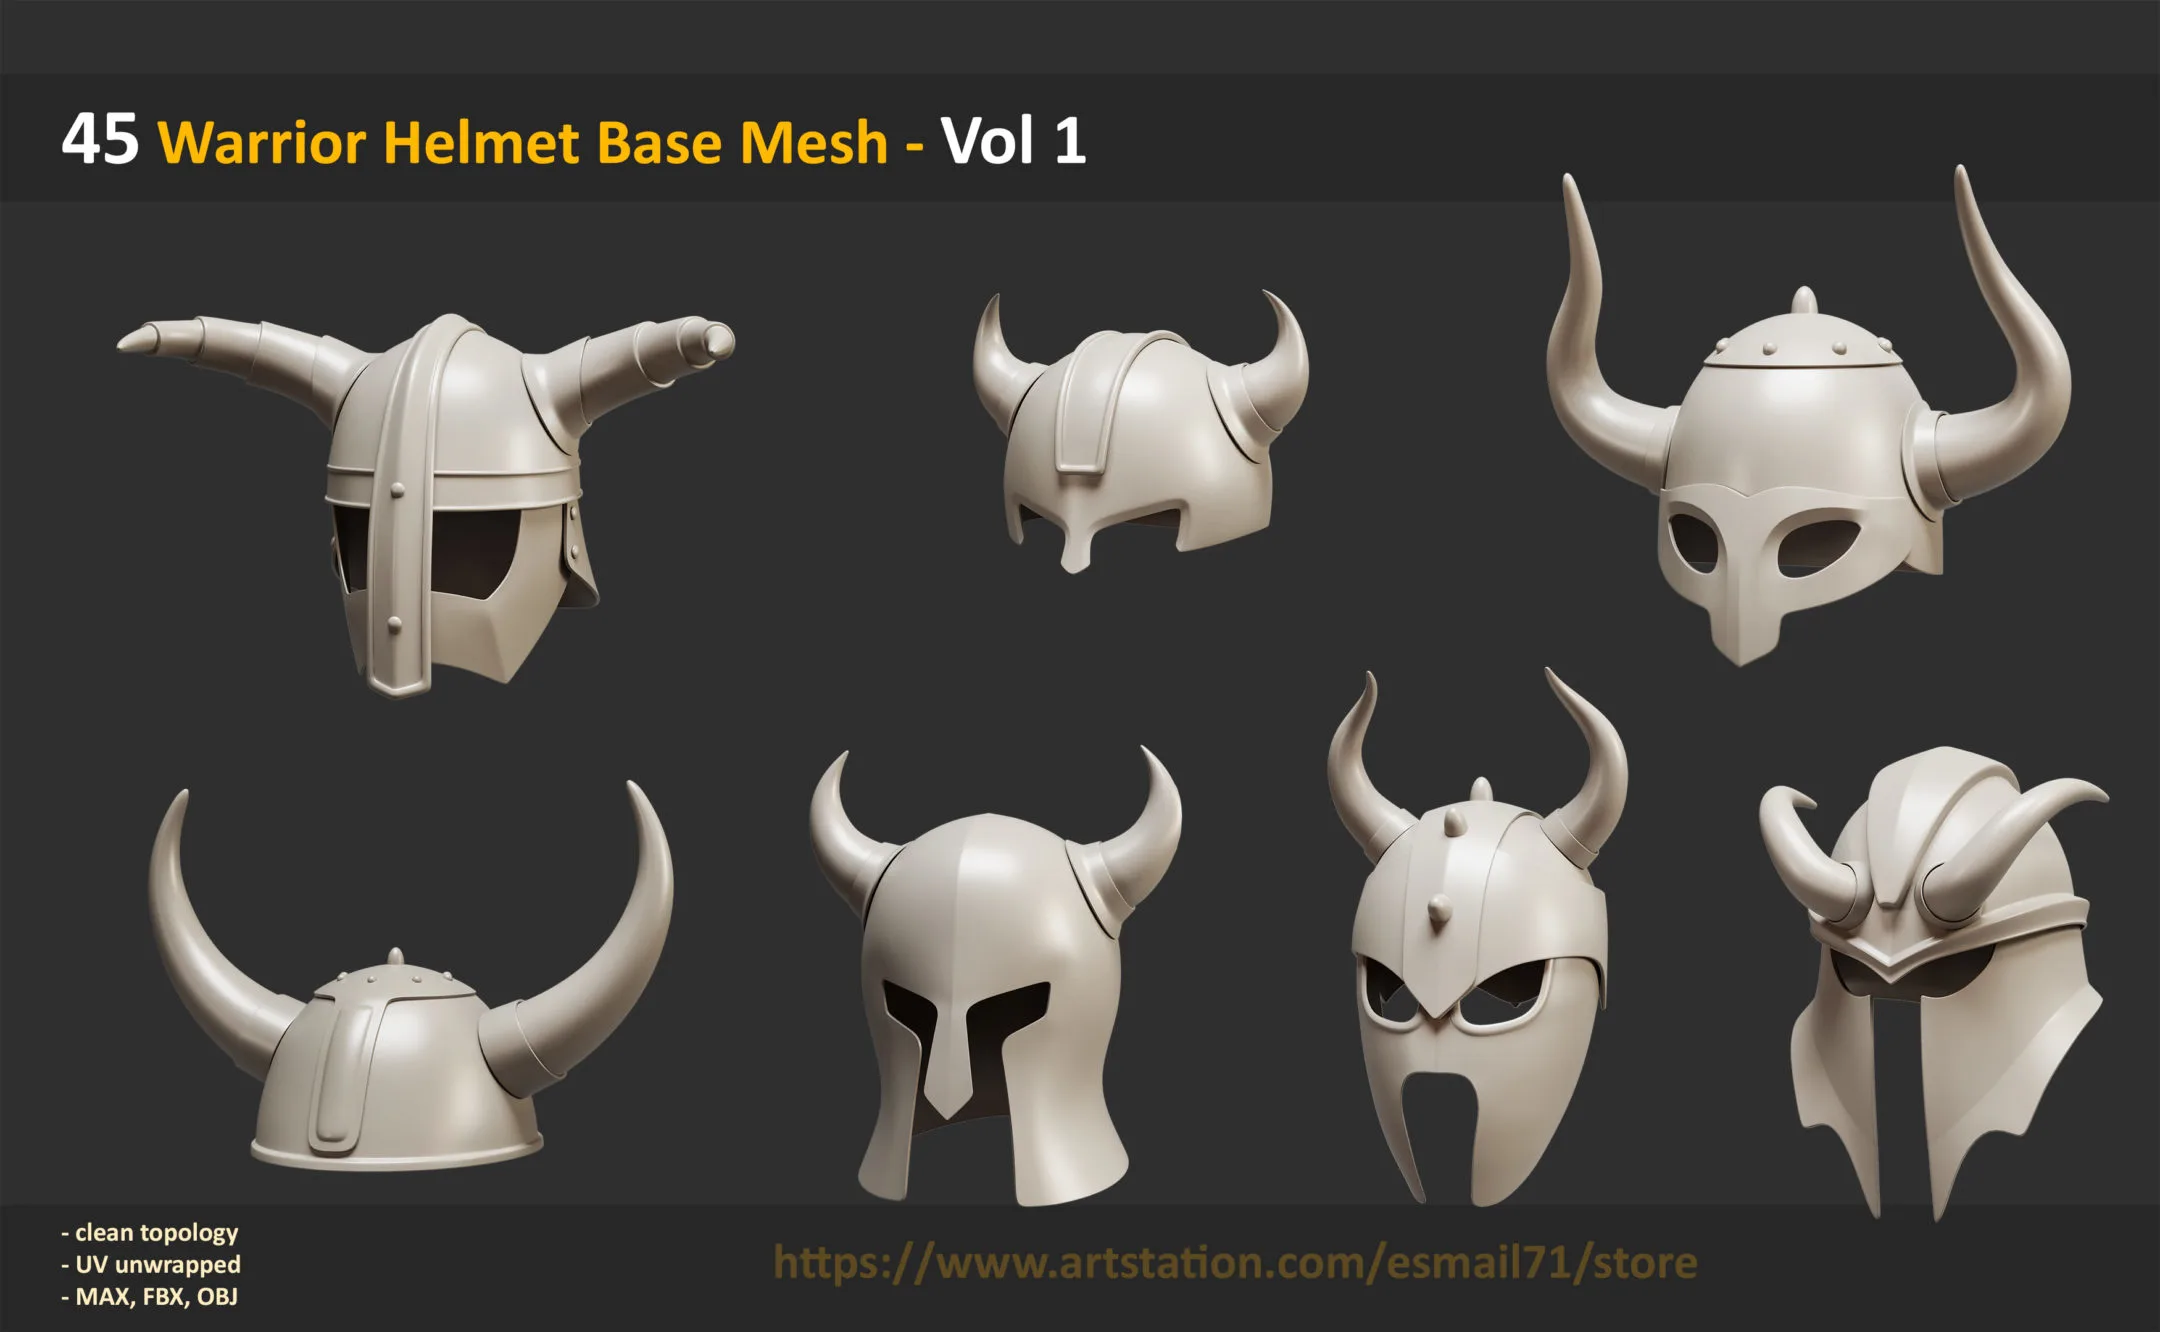 45 Warrior Helmet Base Mesh - Vol 1